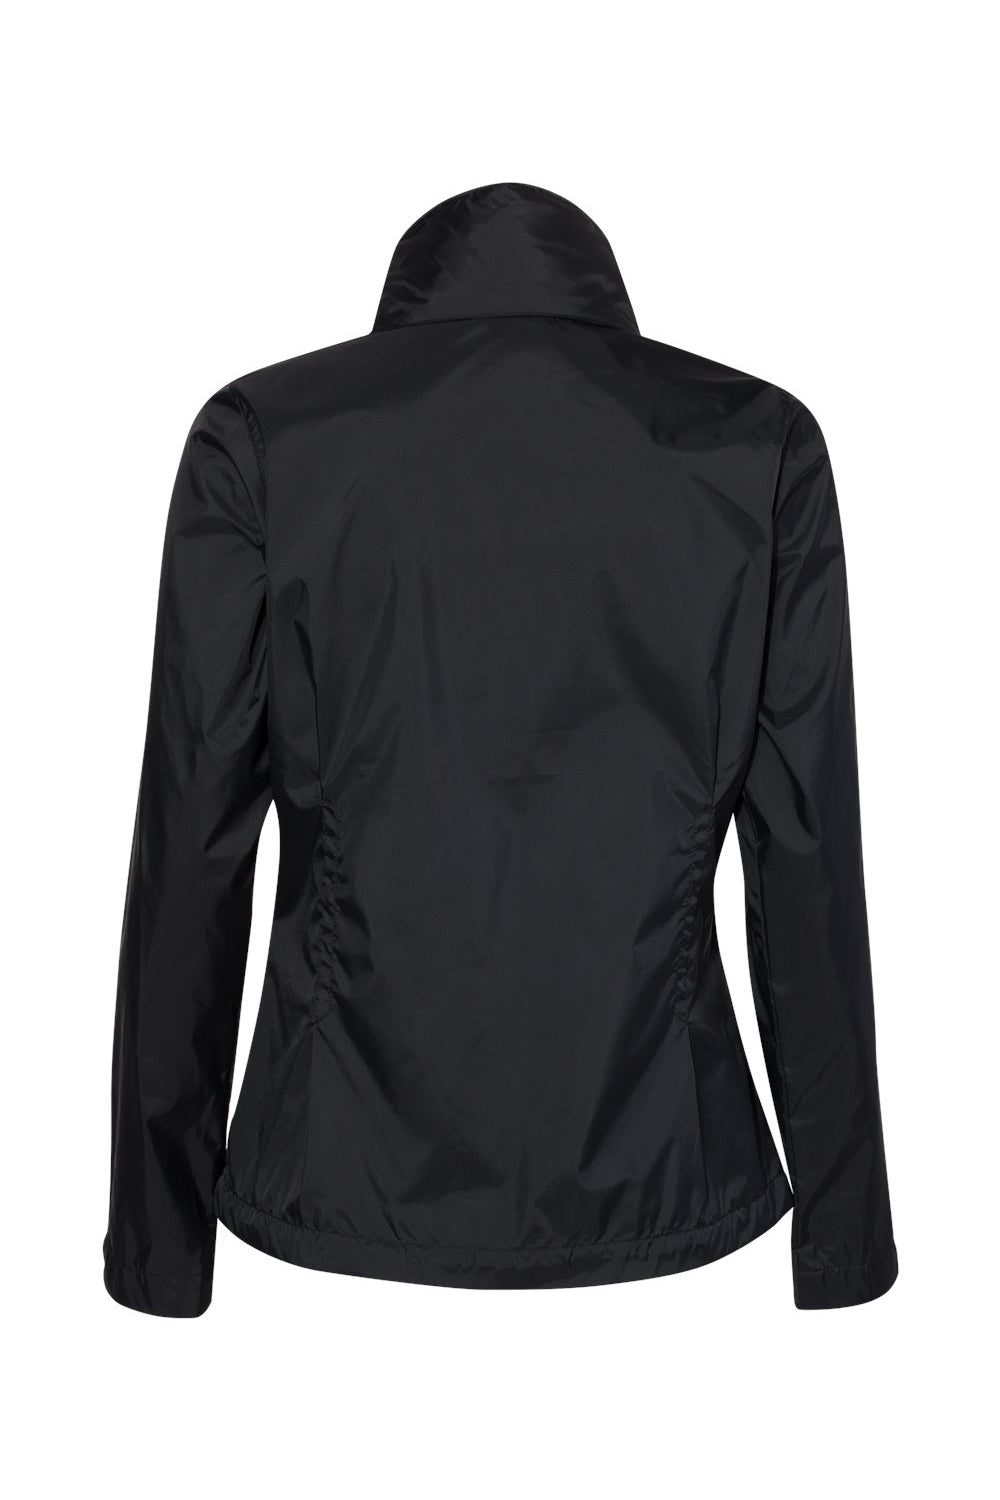 Columbia 177196 Womens Switchback III Full Zip Hooded Jacket Black Flat Back